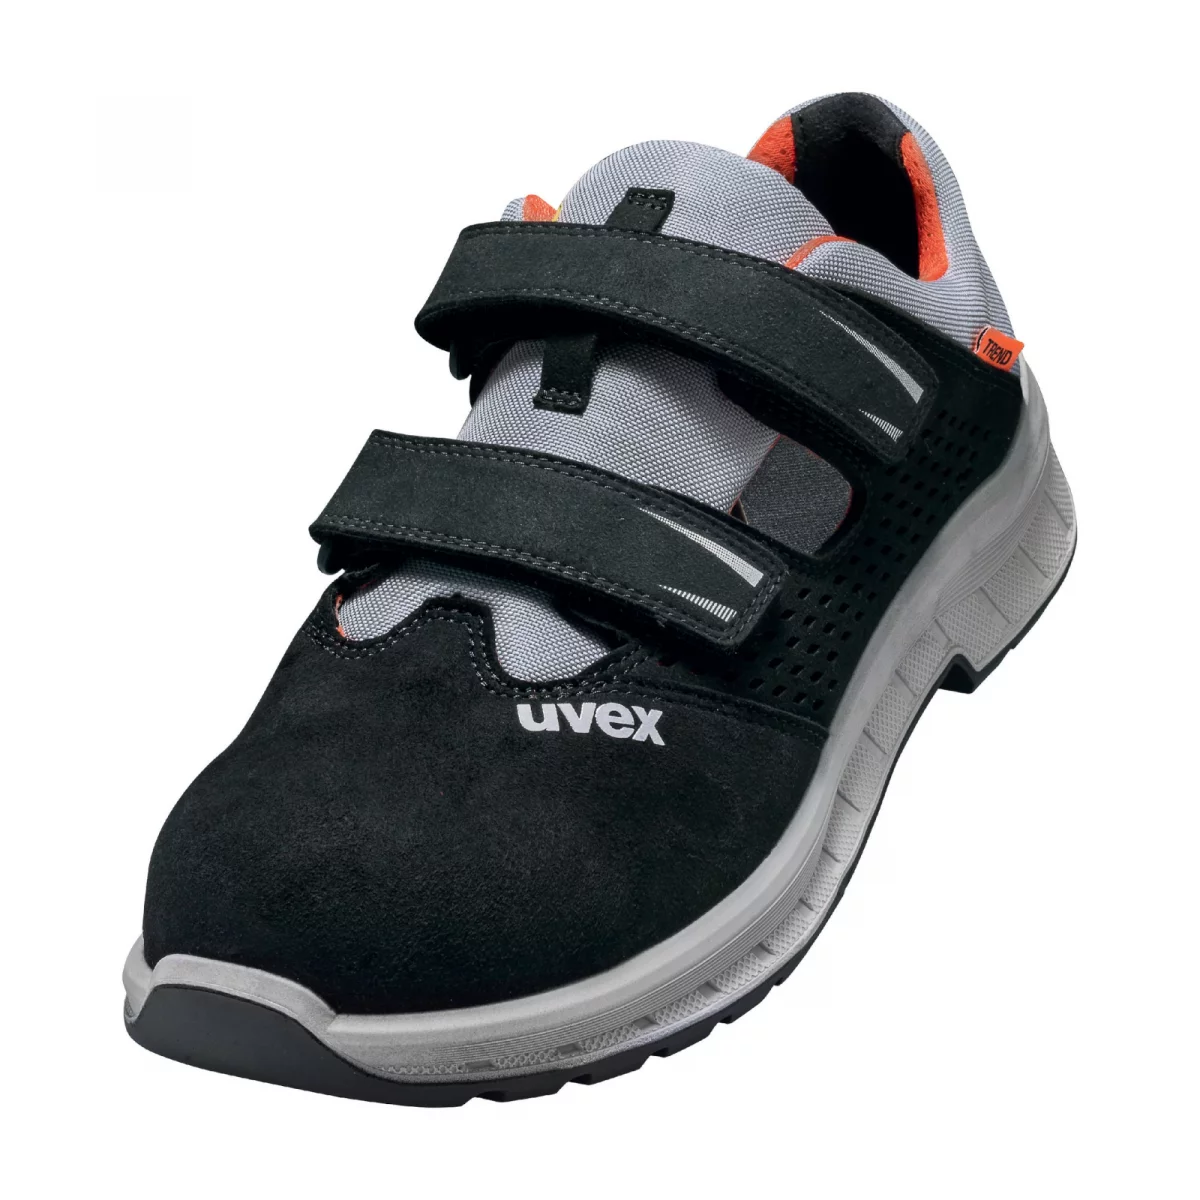 uvex-2-trend-sandale-s1-p-6906